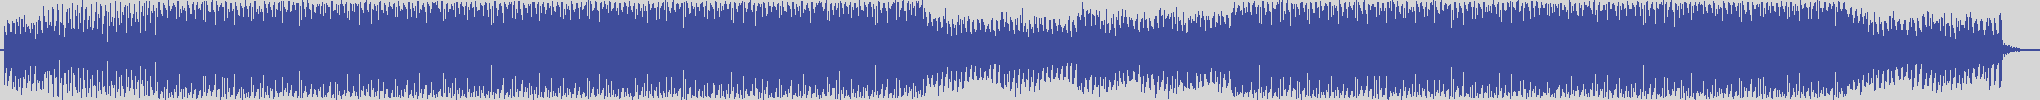 nf_boyz_records [NFY003] Ted Mackenzie - Sun Choir [Long Island Mix] audio wave form